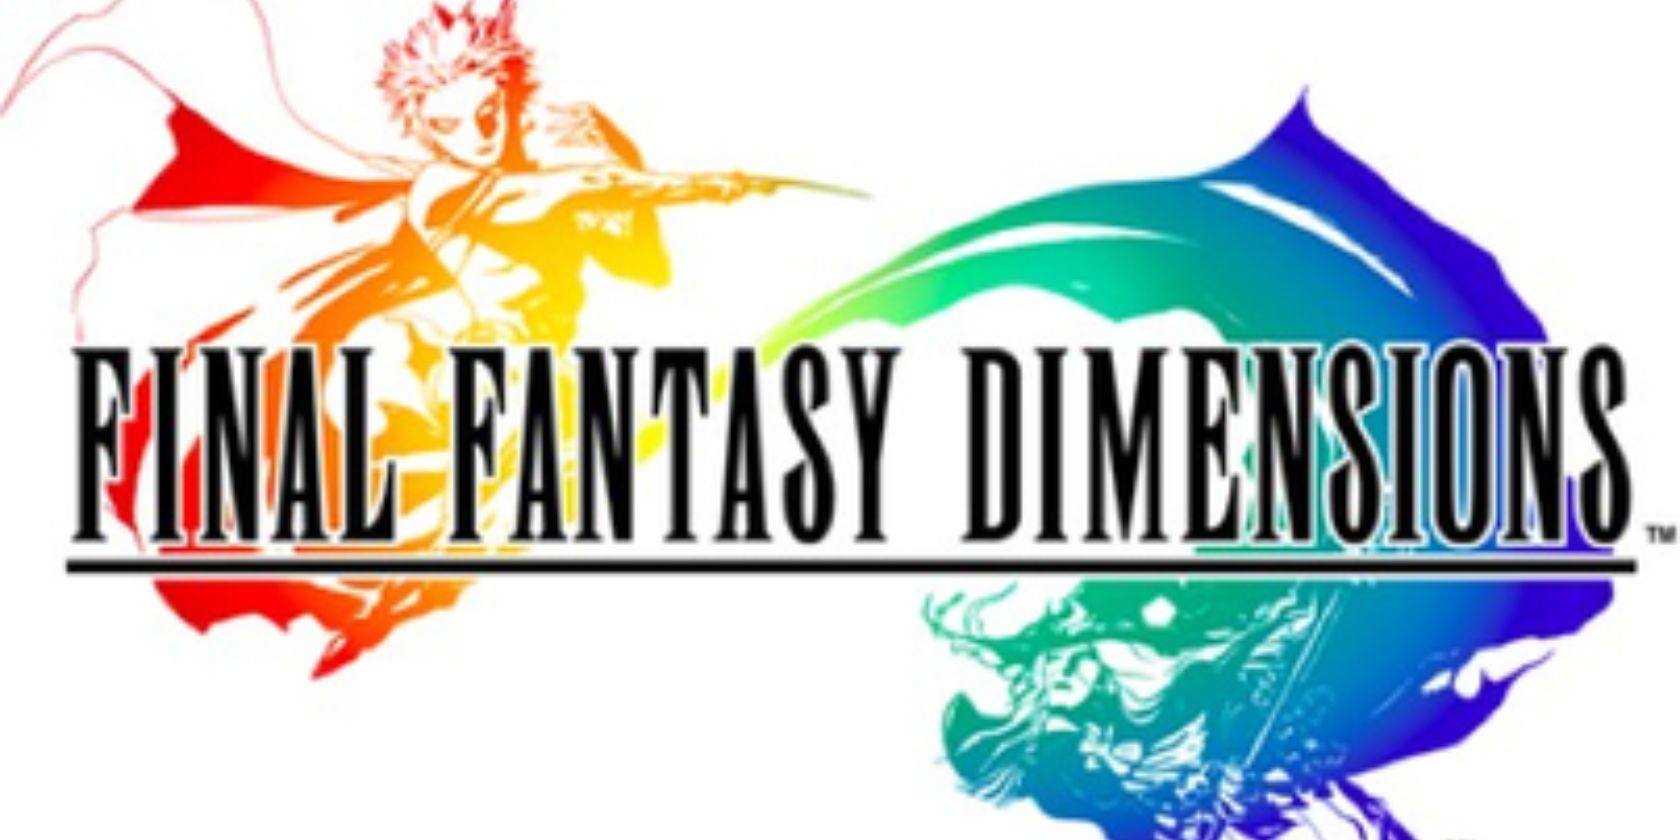 Final Fantasy Dimensions Logo